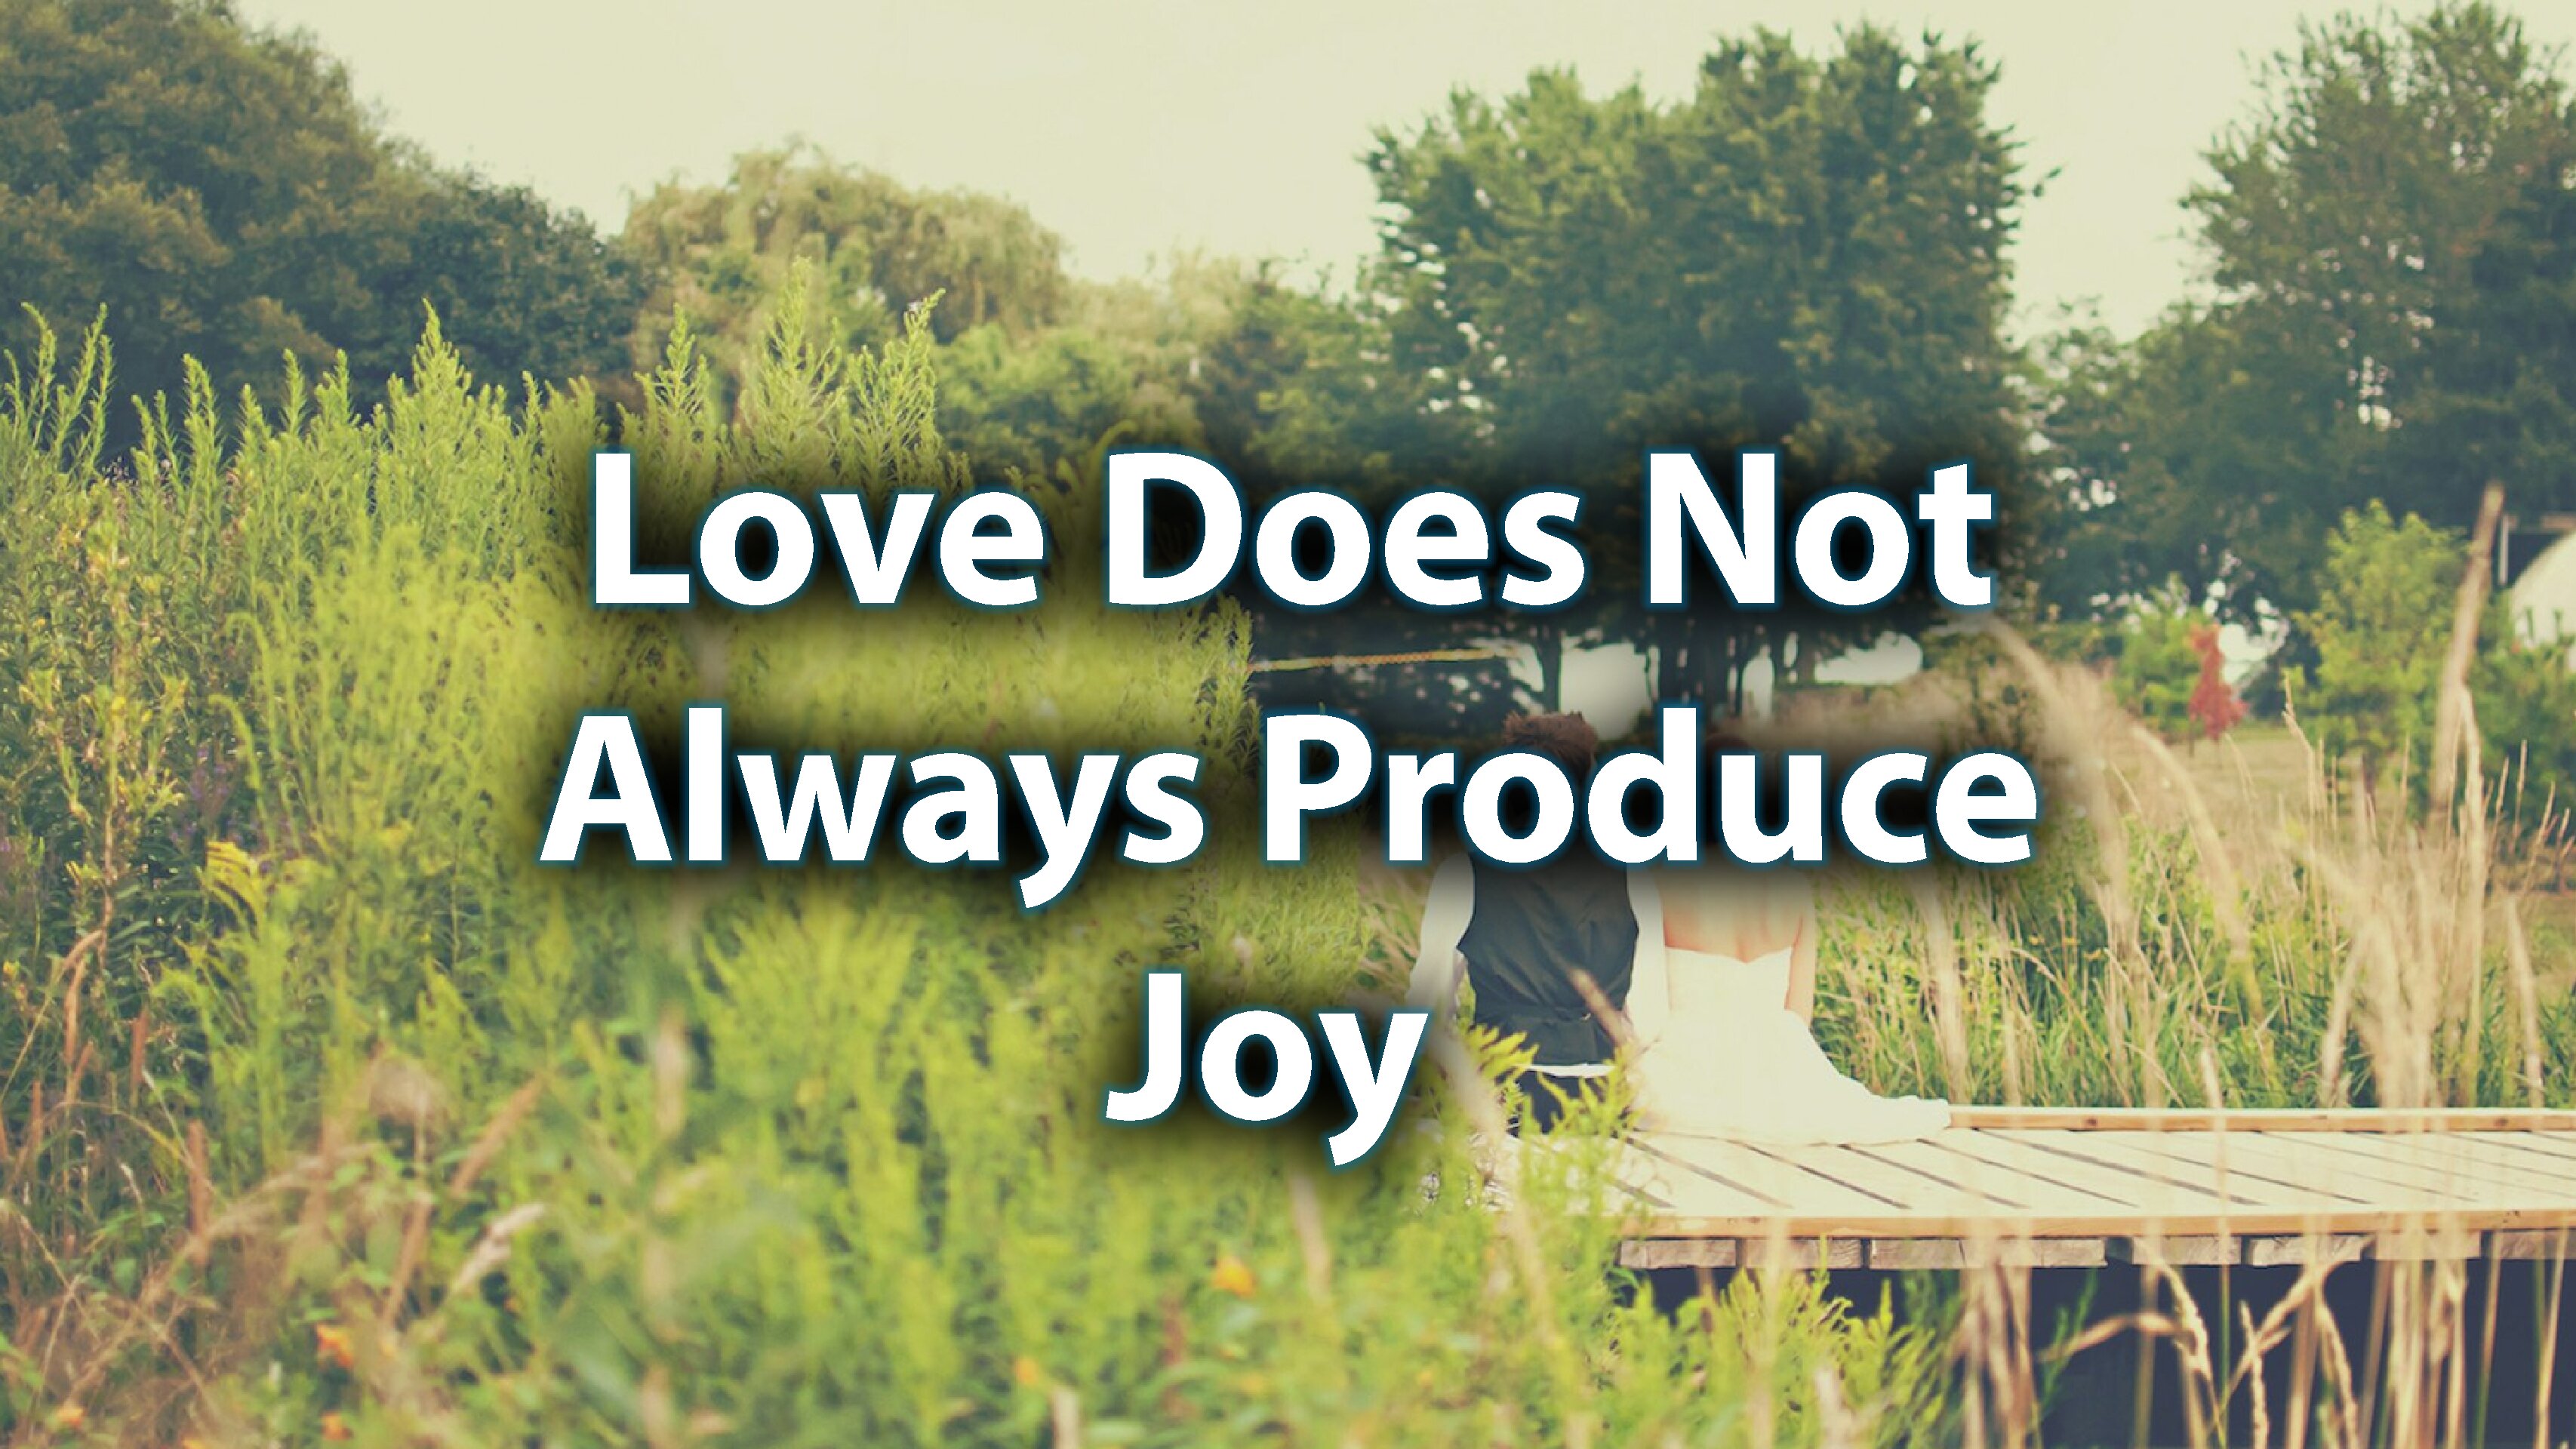 Day 9: Love Does Not Always Produce Joy